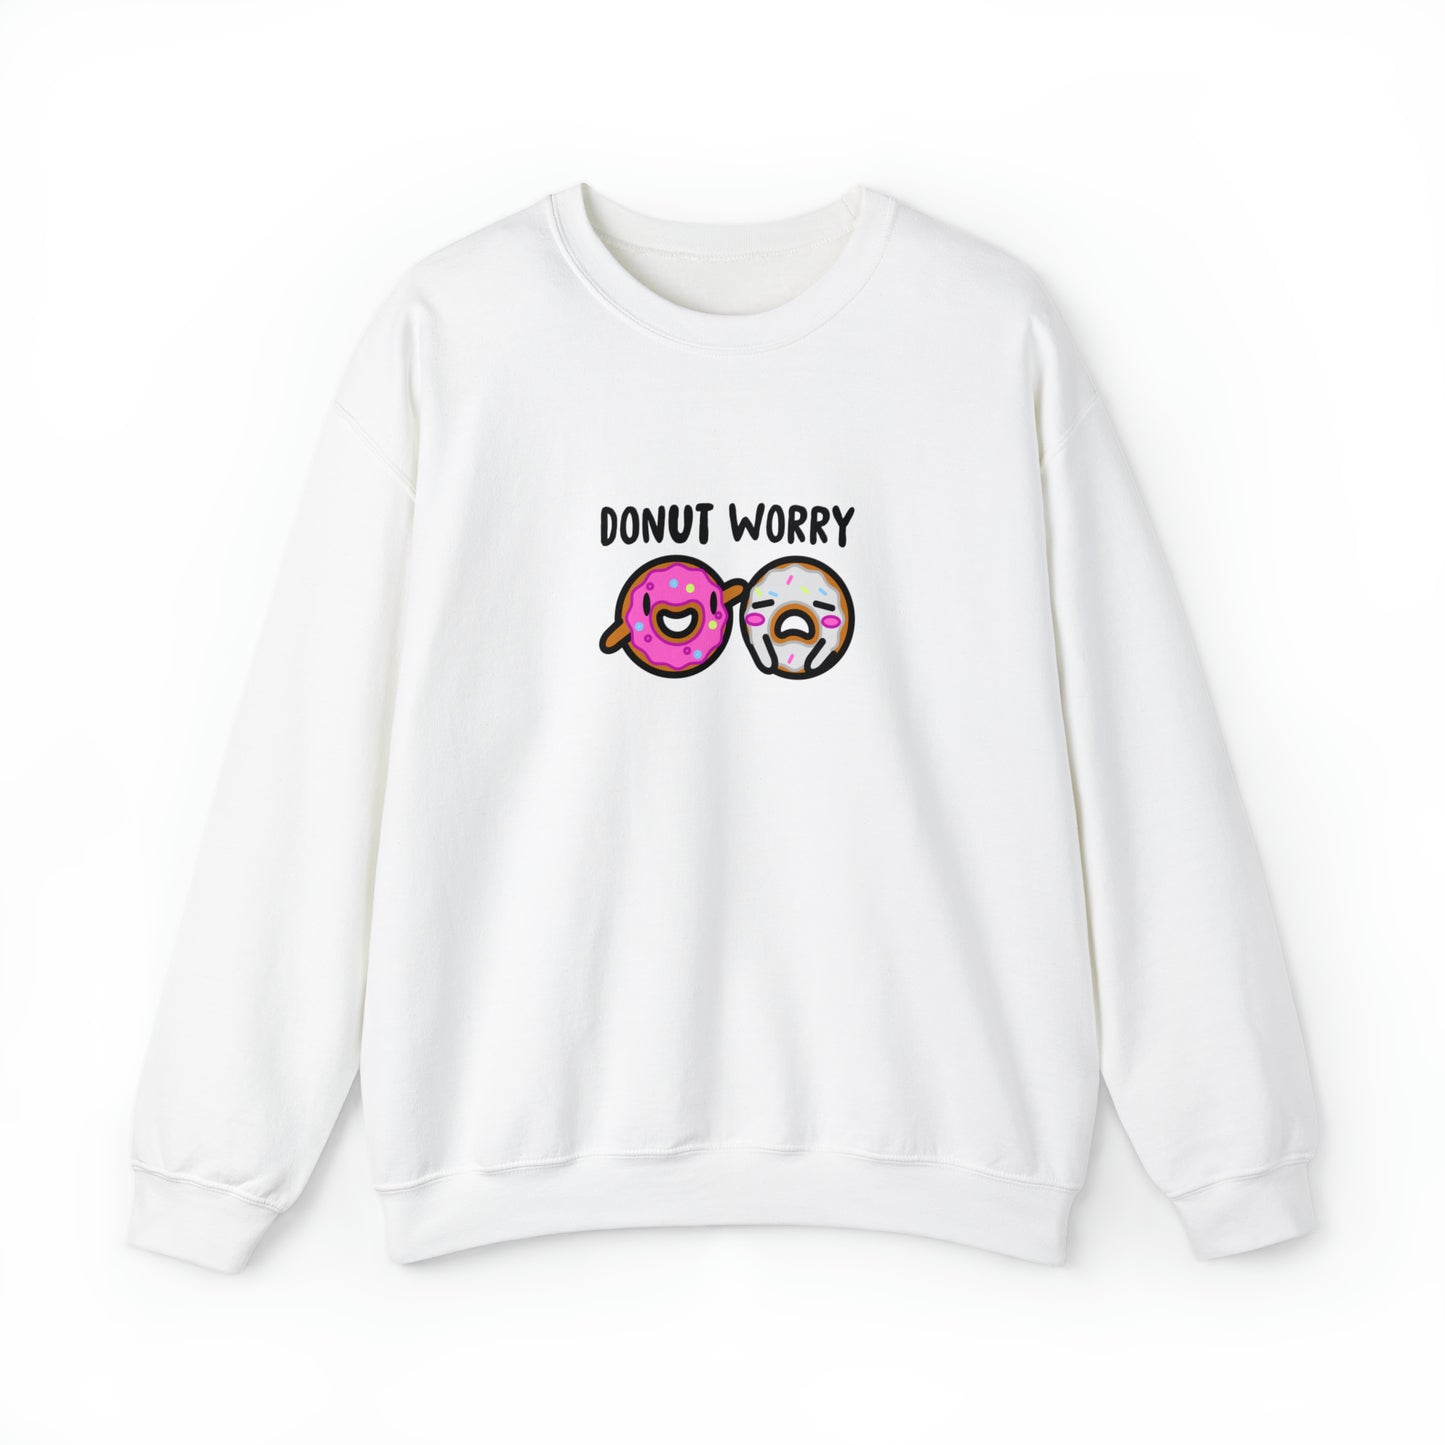 Custom Parody Crewneck Sweatshirt, DONUT worry Design